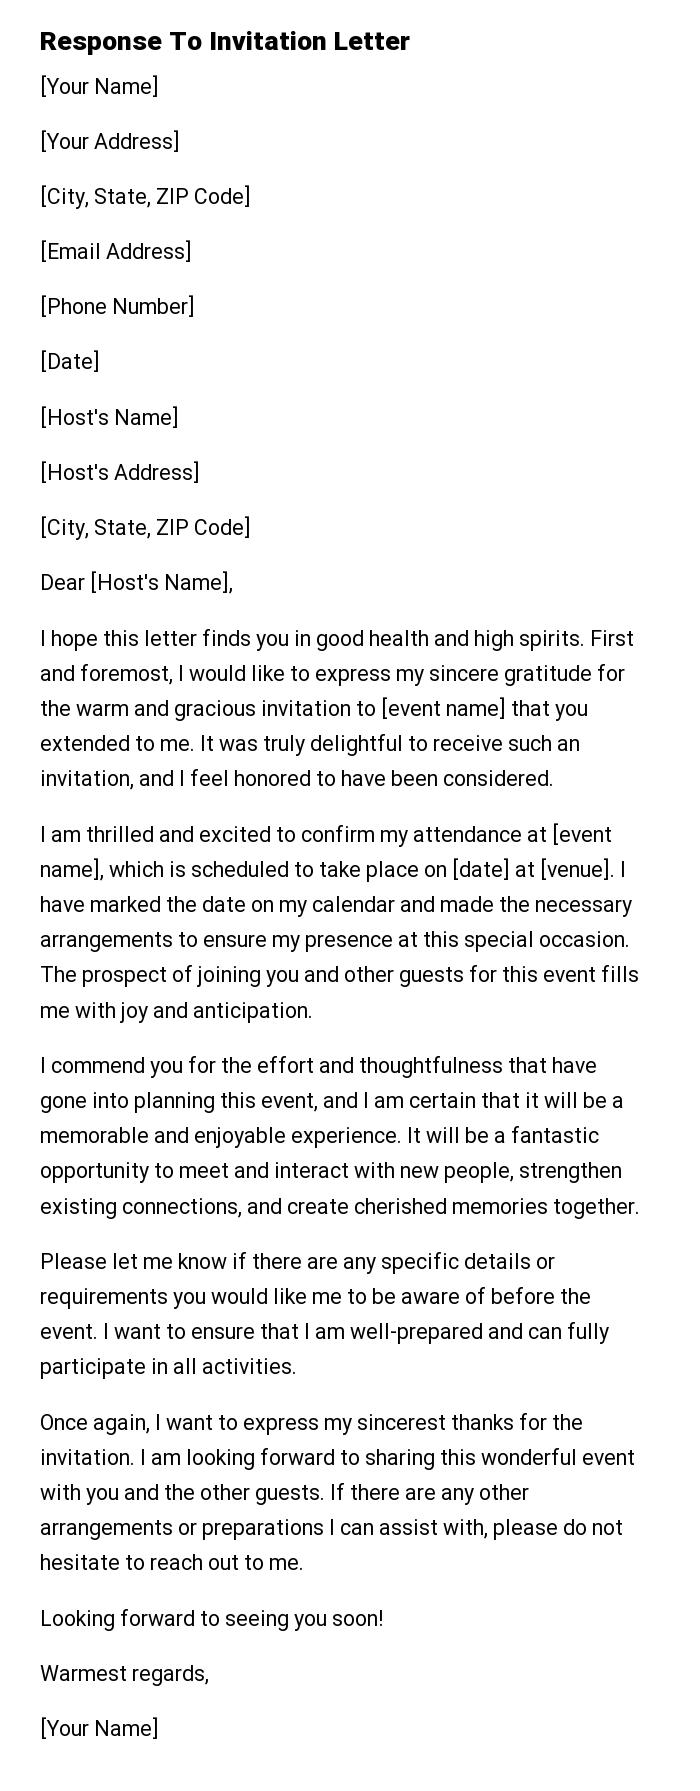 Response To Invitation Letter